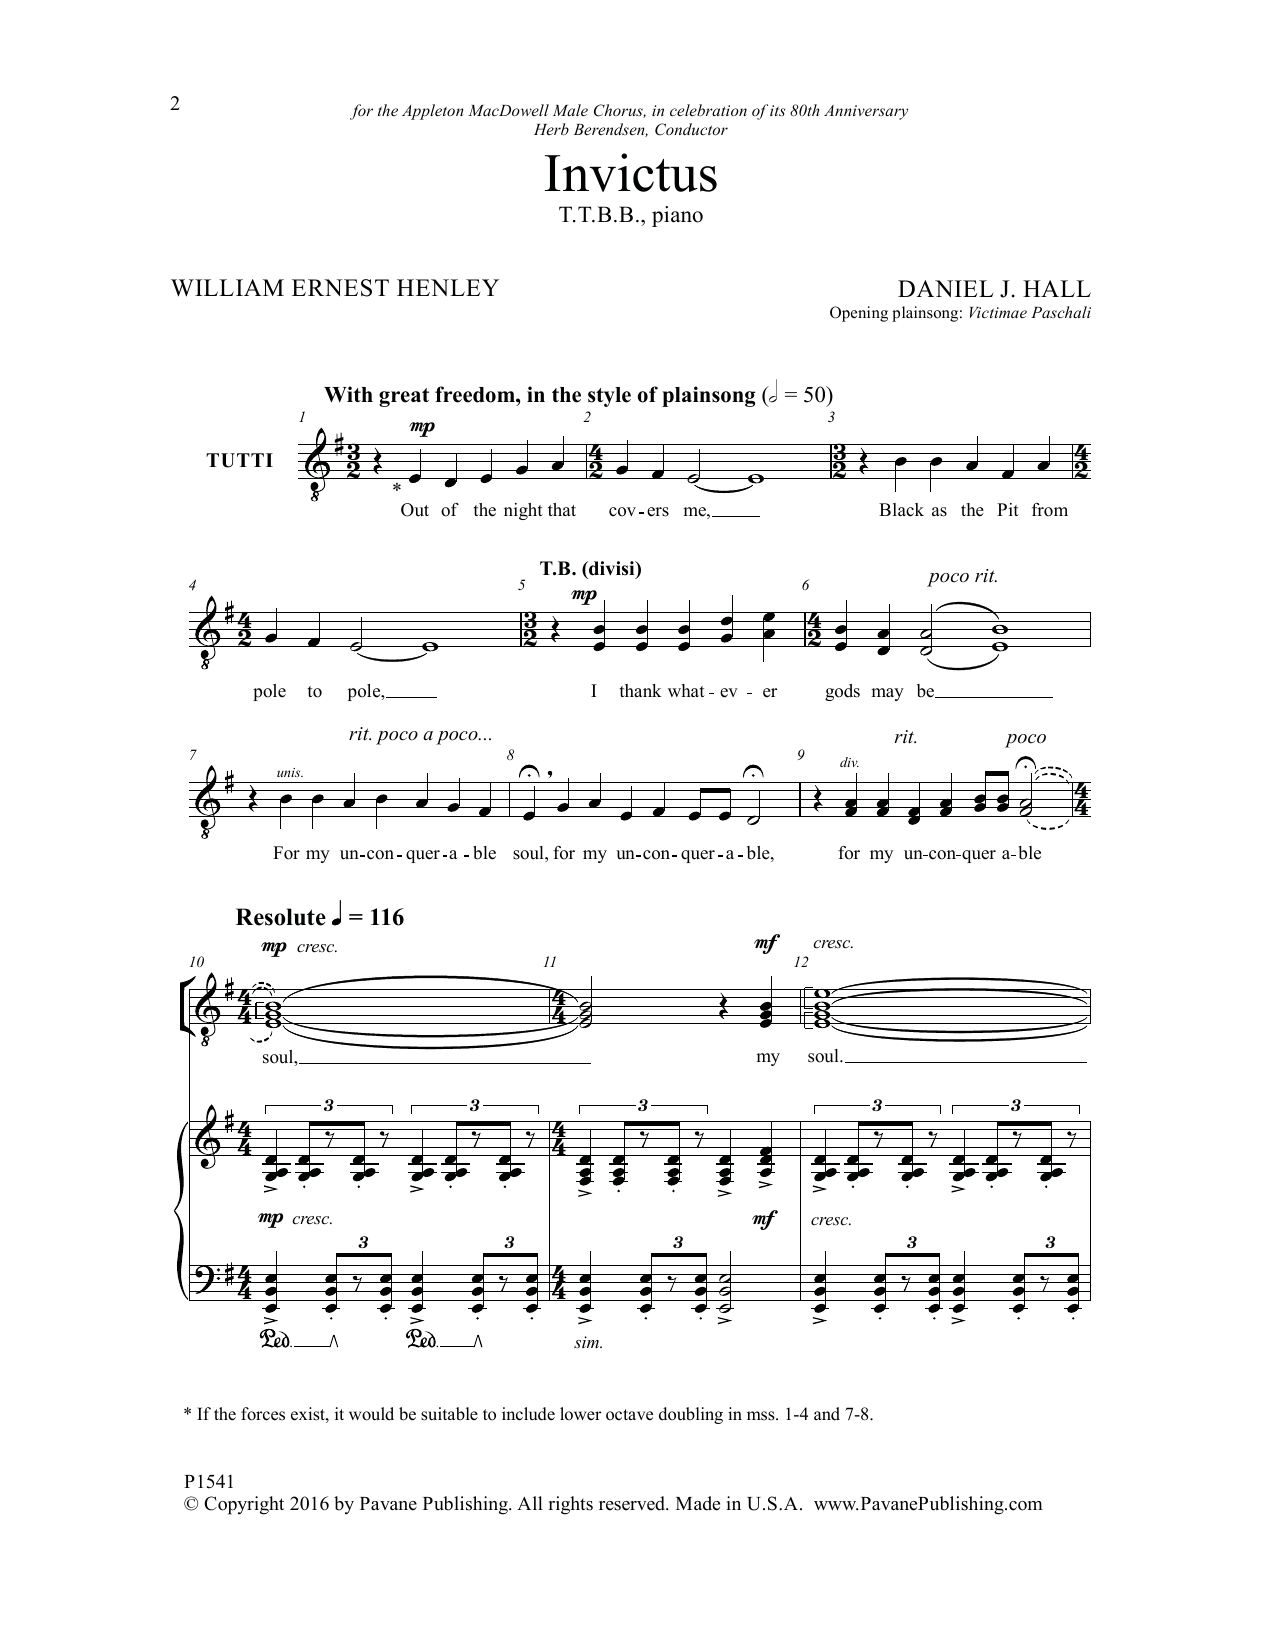 Daniel J. Hall Invictus sheet music notes and chords arranged for TTBB Choir